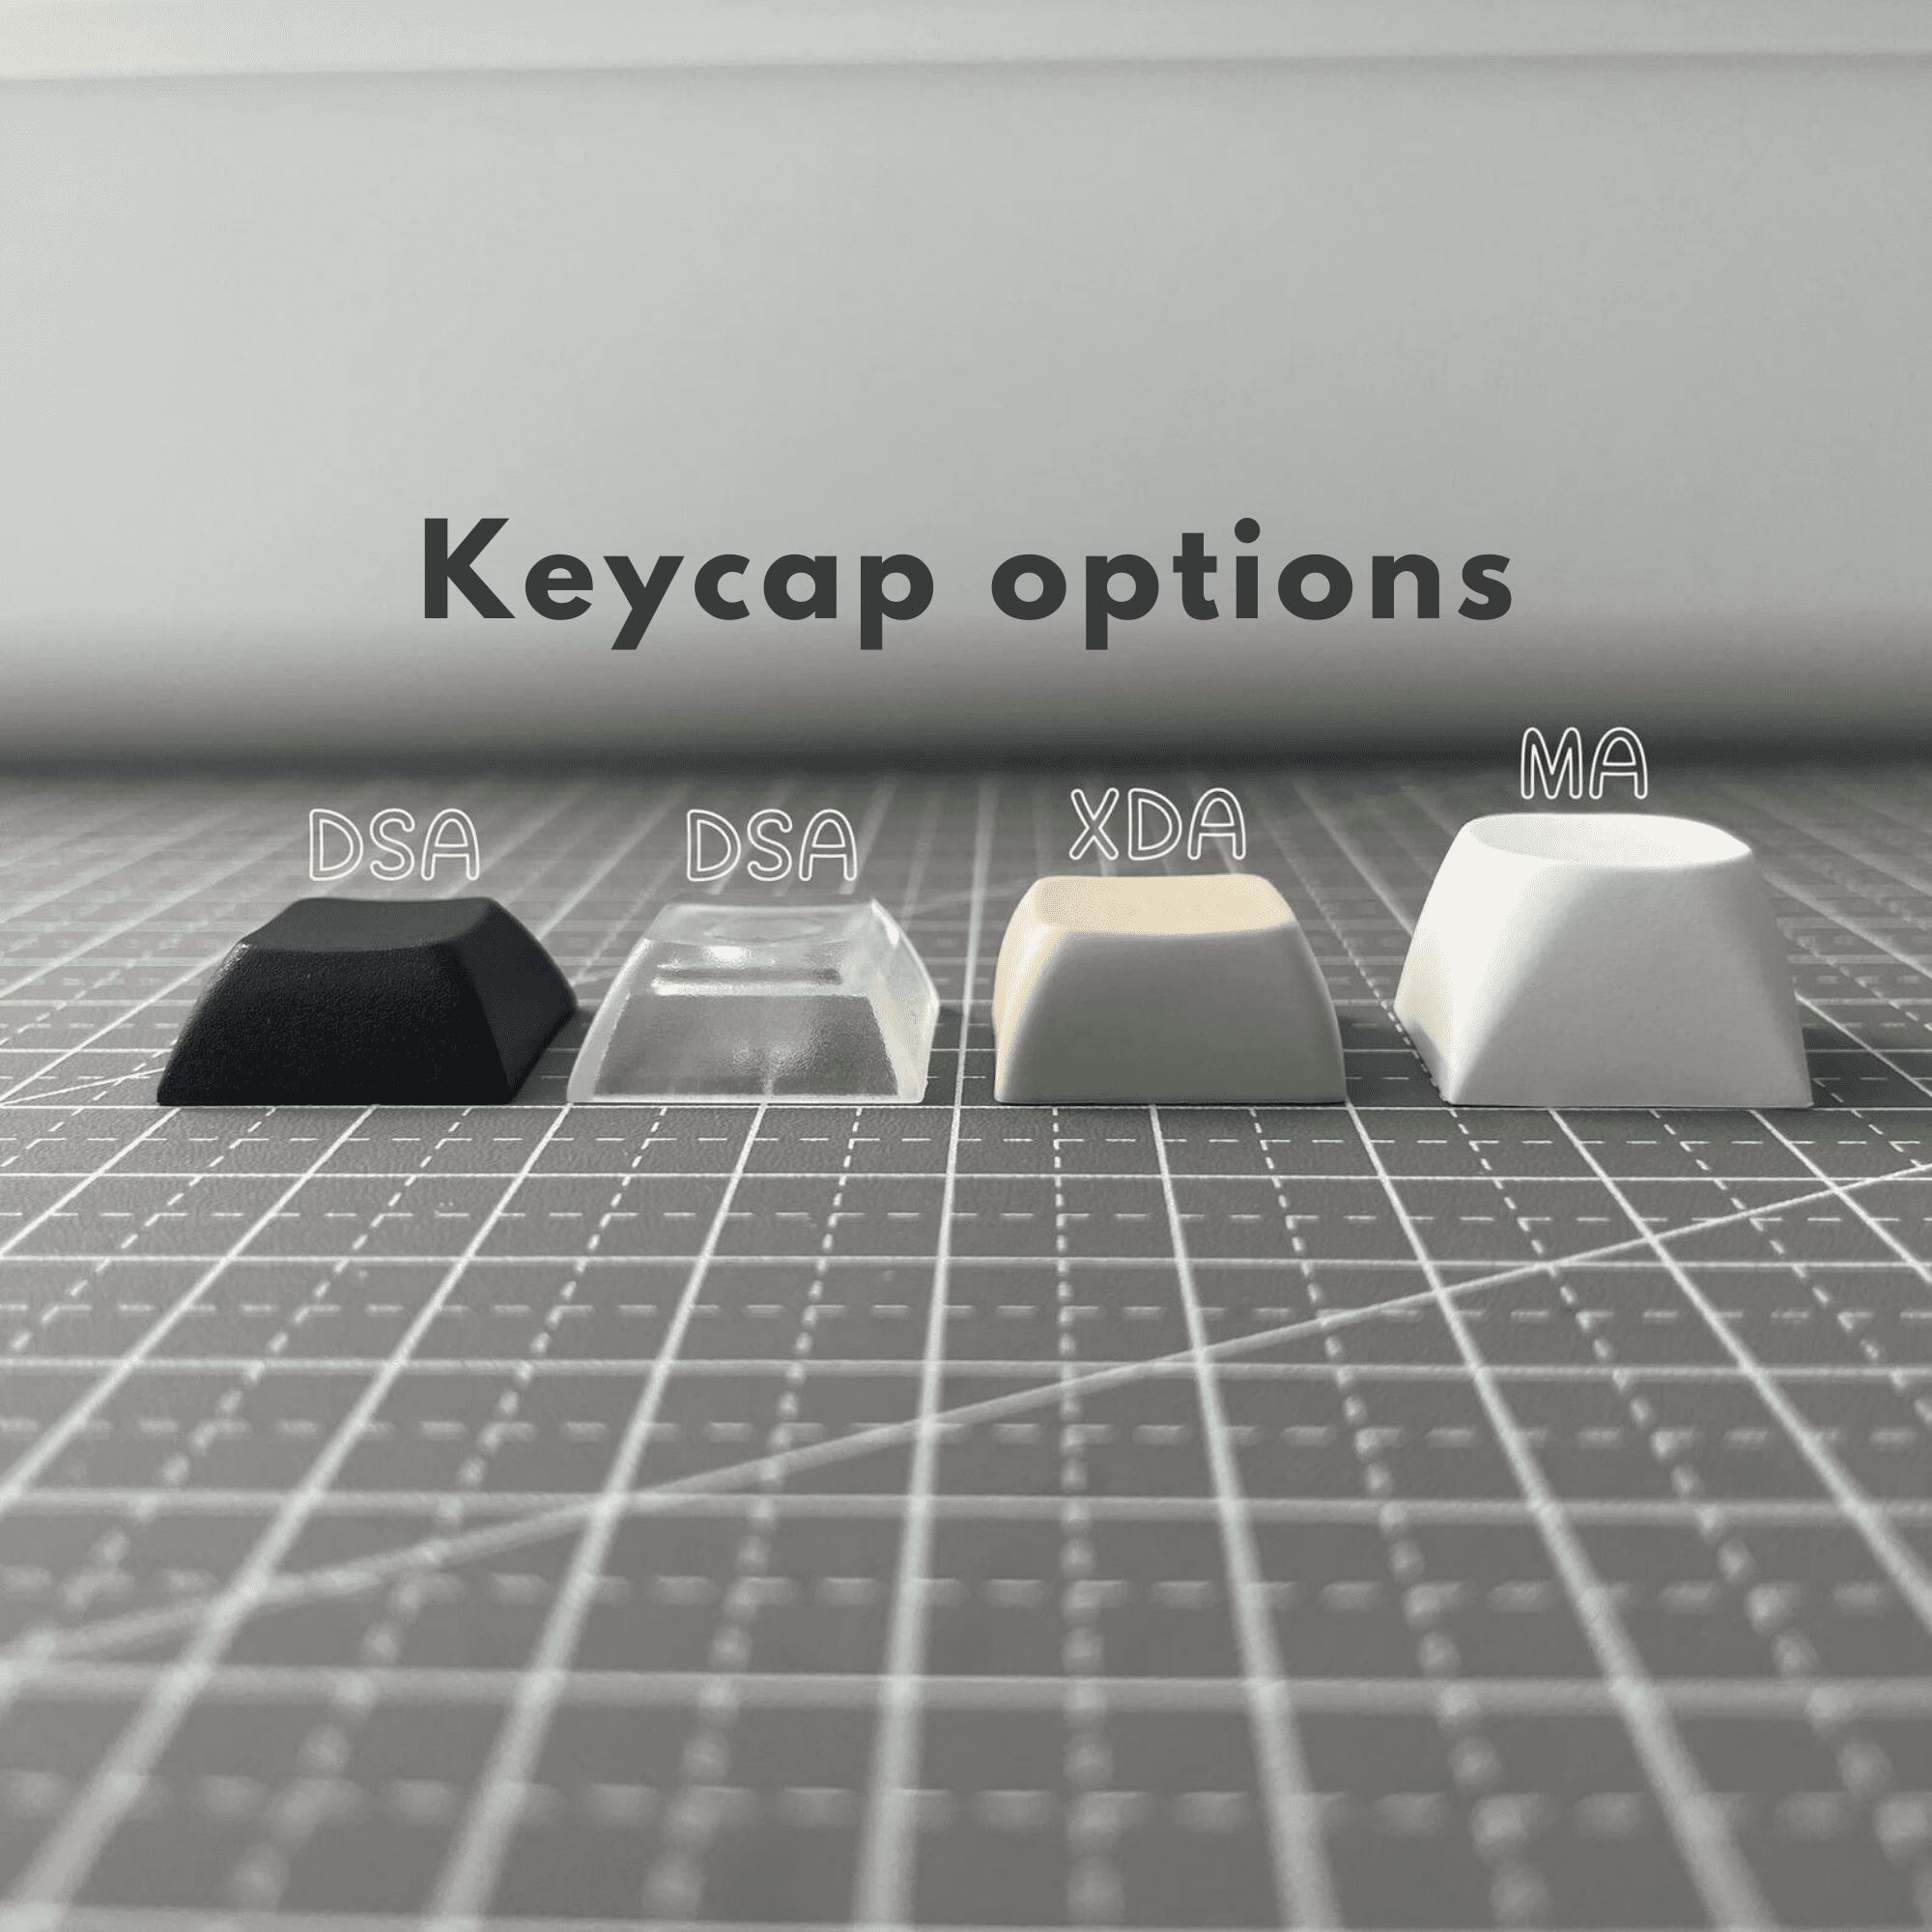 Keycap options